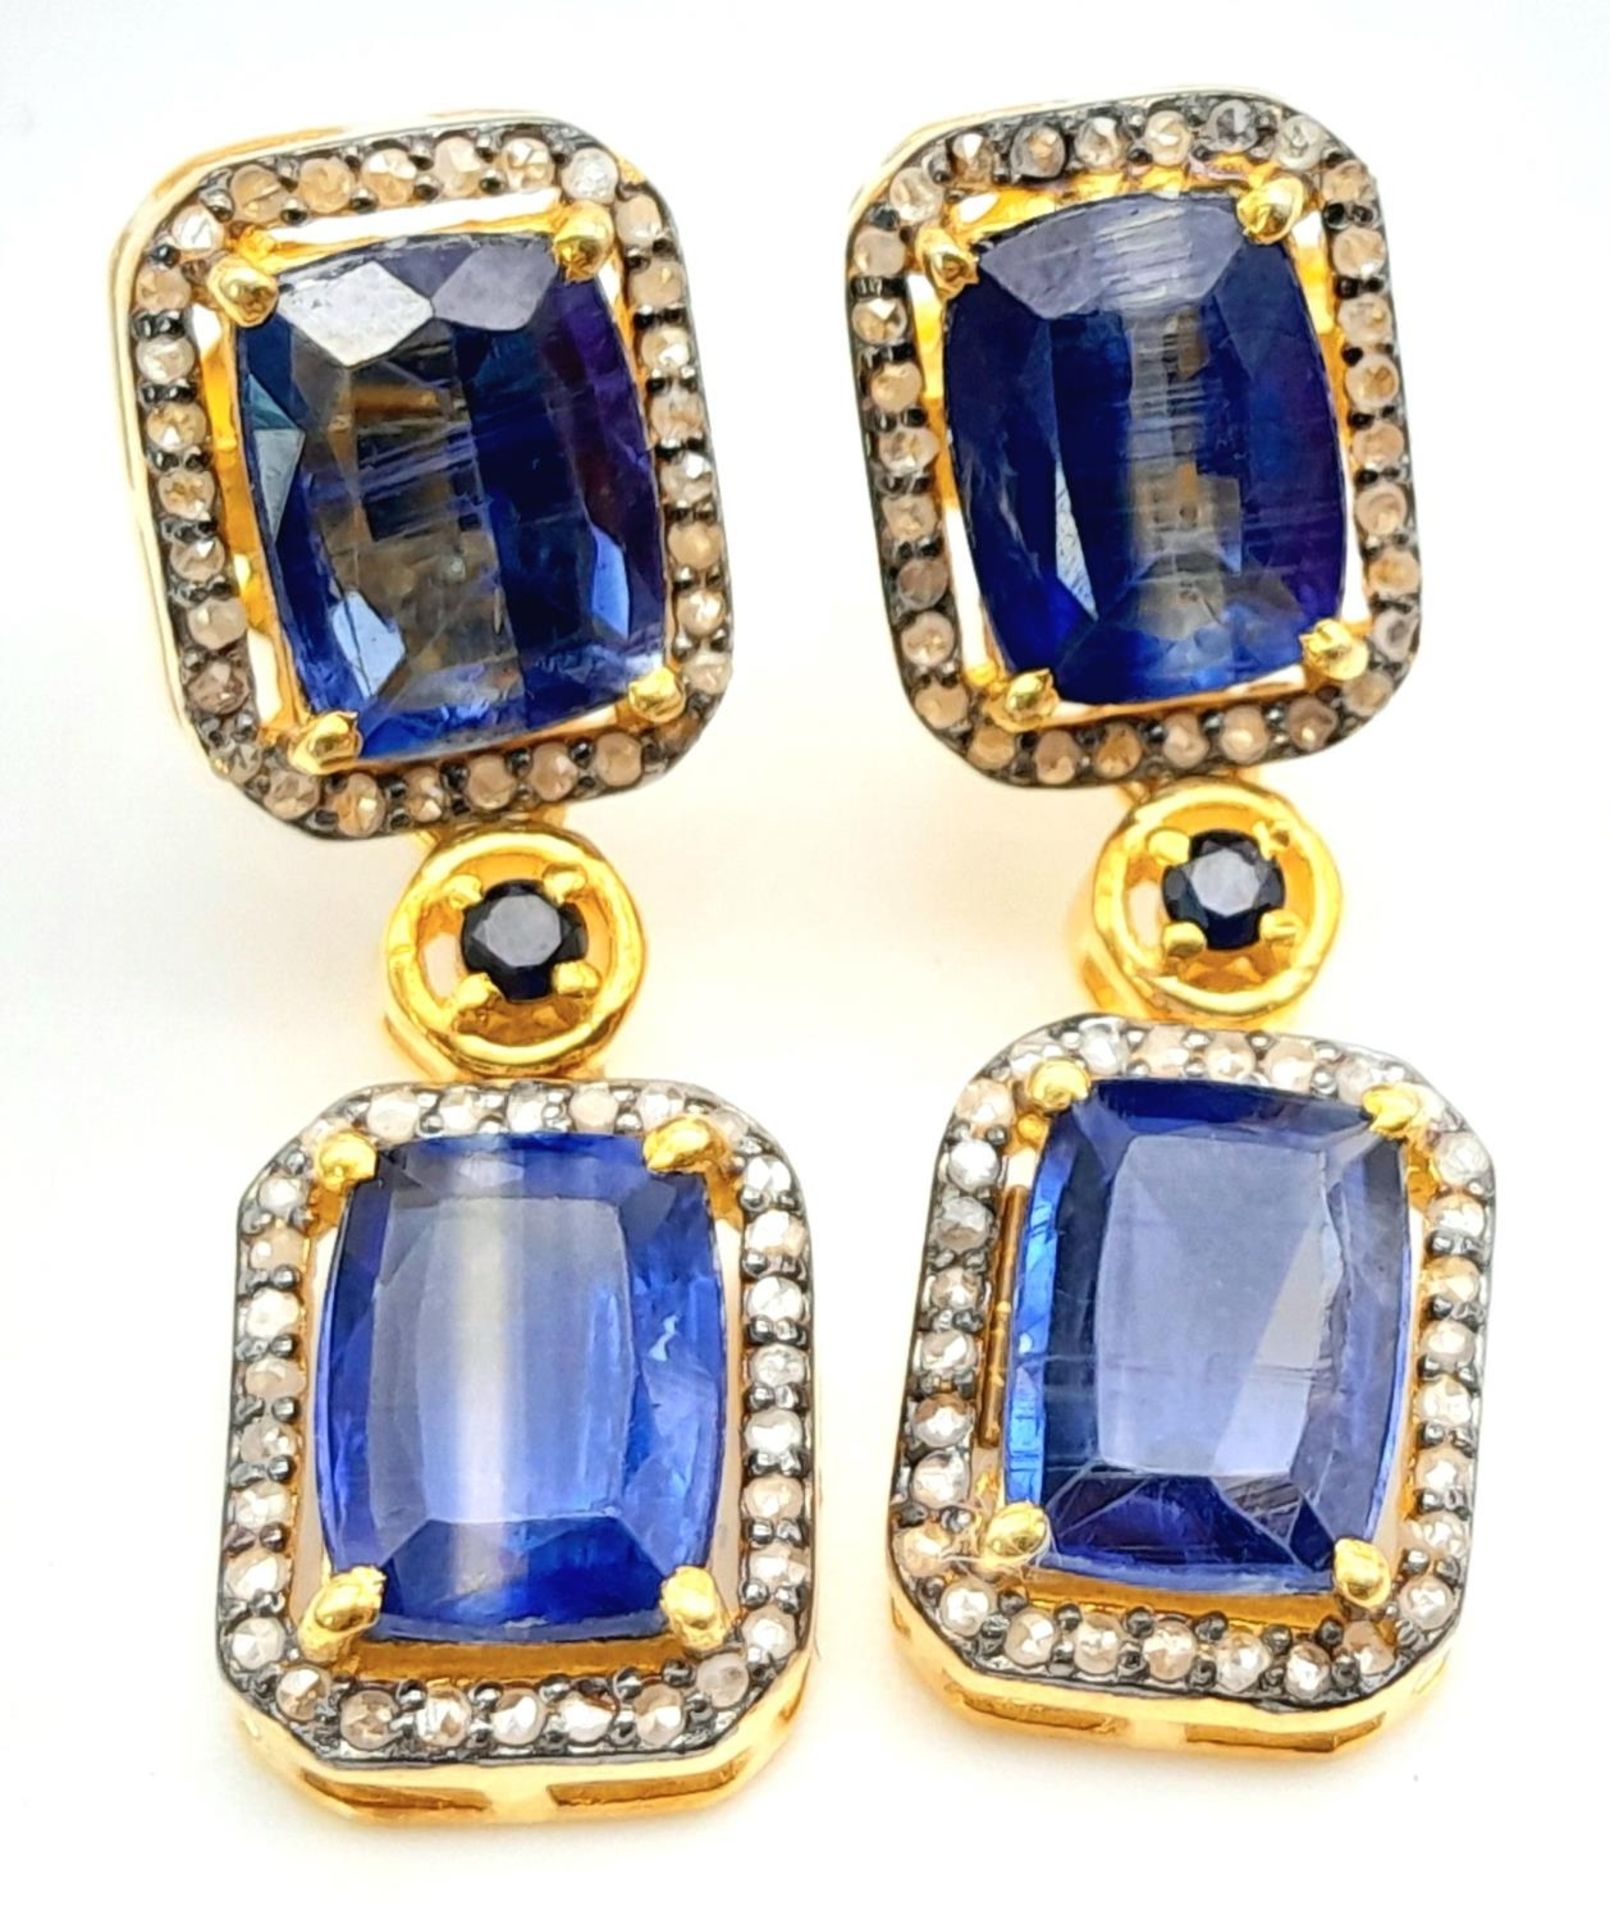 A Pair of Kyanite and Diamond Drop Earrings. 4ctw - kyanite and 0.40ctw of old cut diamonds. Set